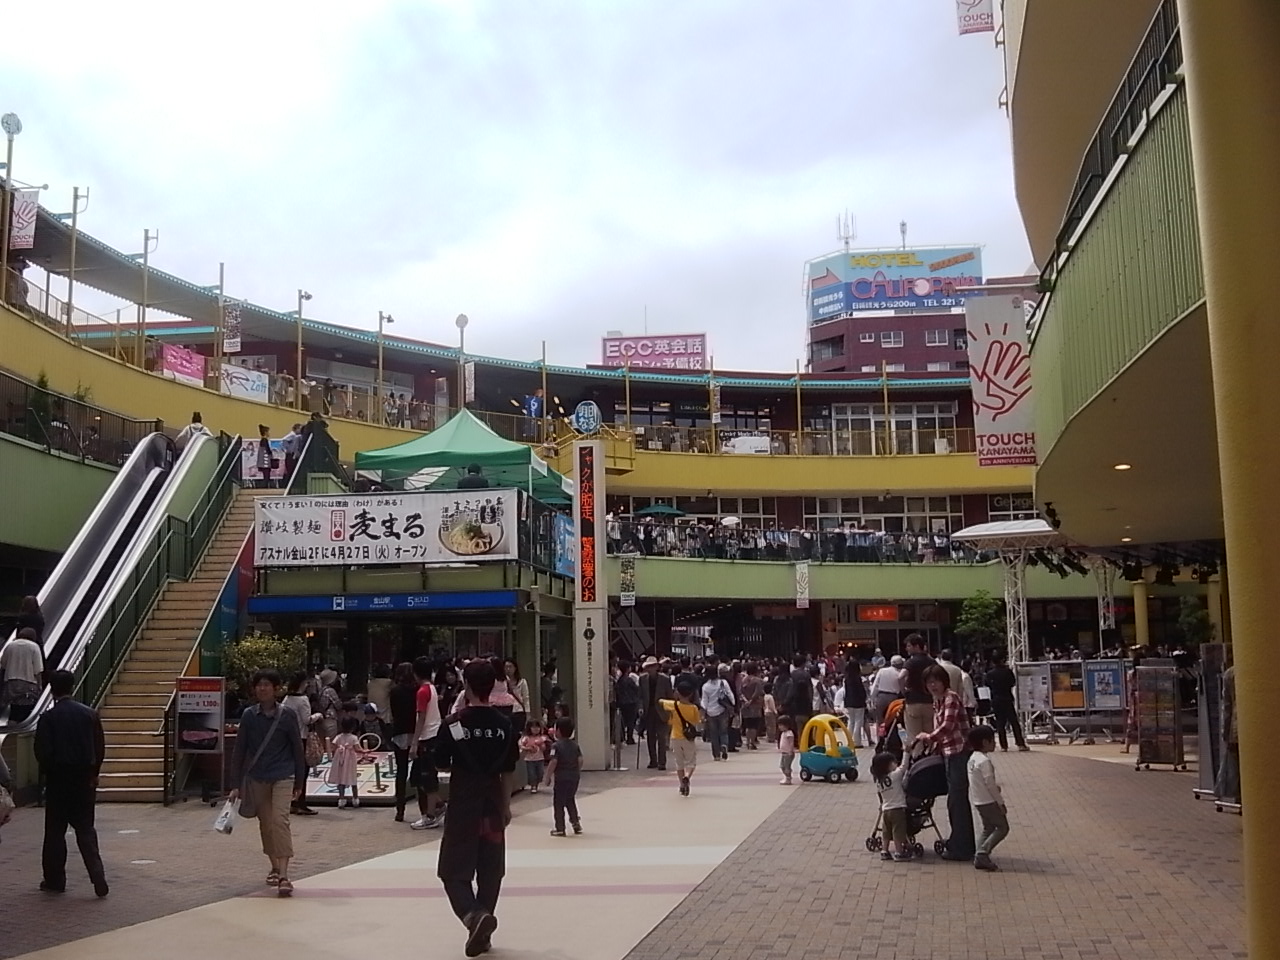 Shopping centre. 388m to Arsenal Kanayama (shopping center)